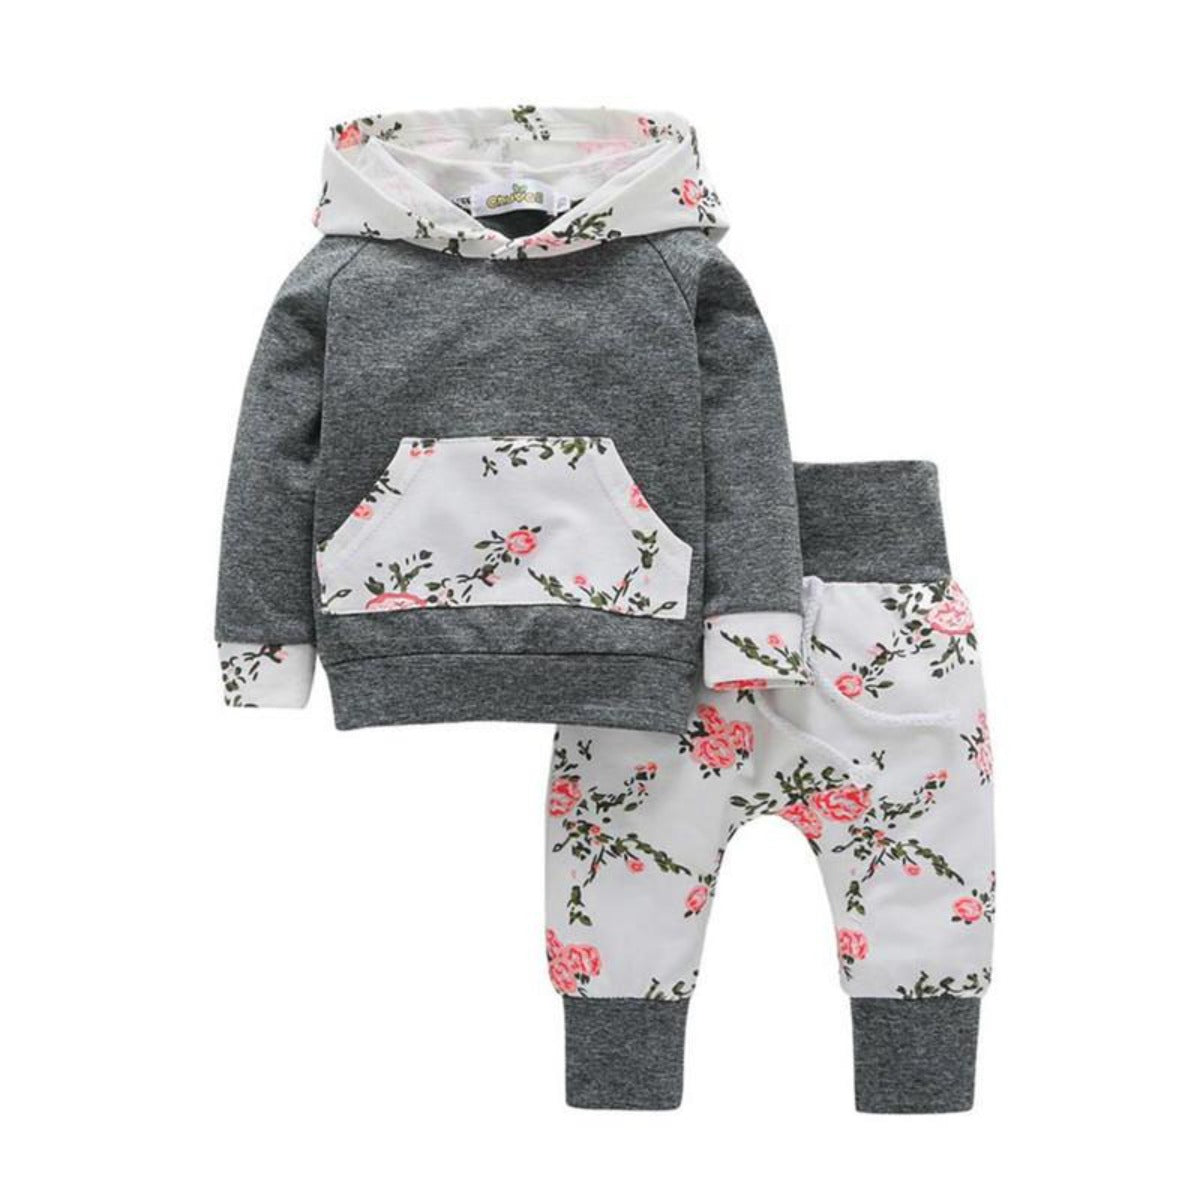 New 2pcs Toddler Infant Baby Boy Girl Clothes Set